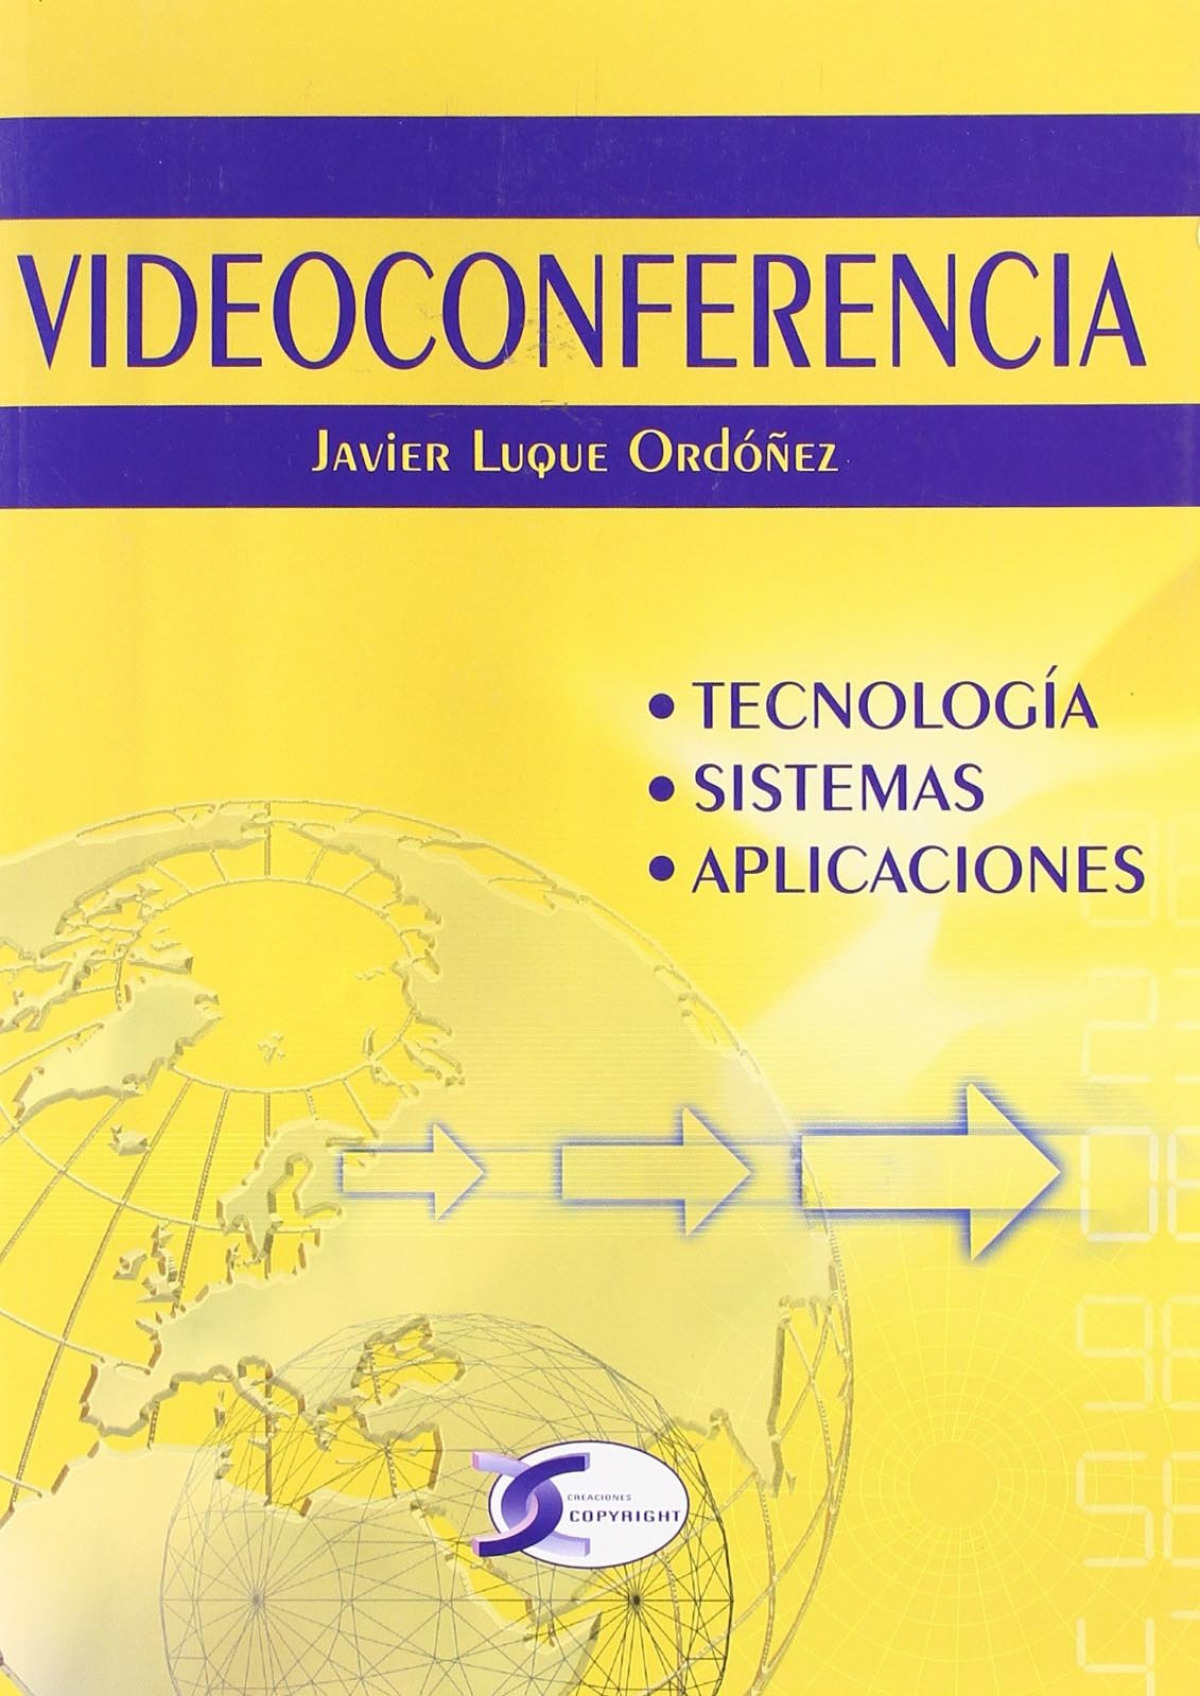 Videoconferencia - Javier Luque Ordóñez